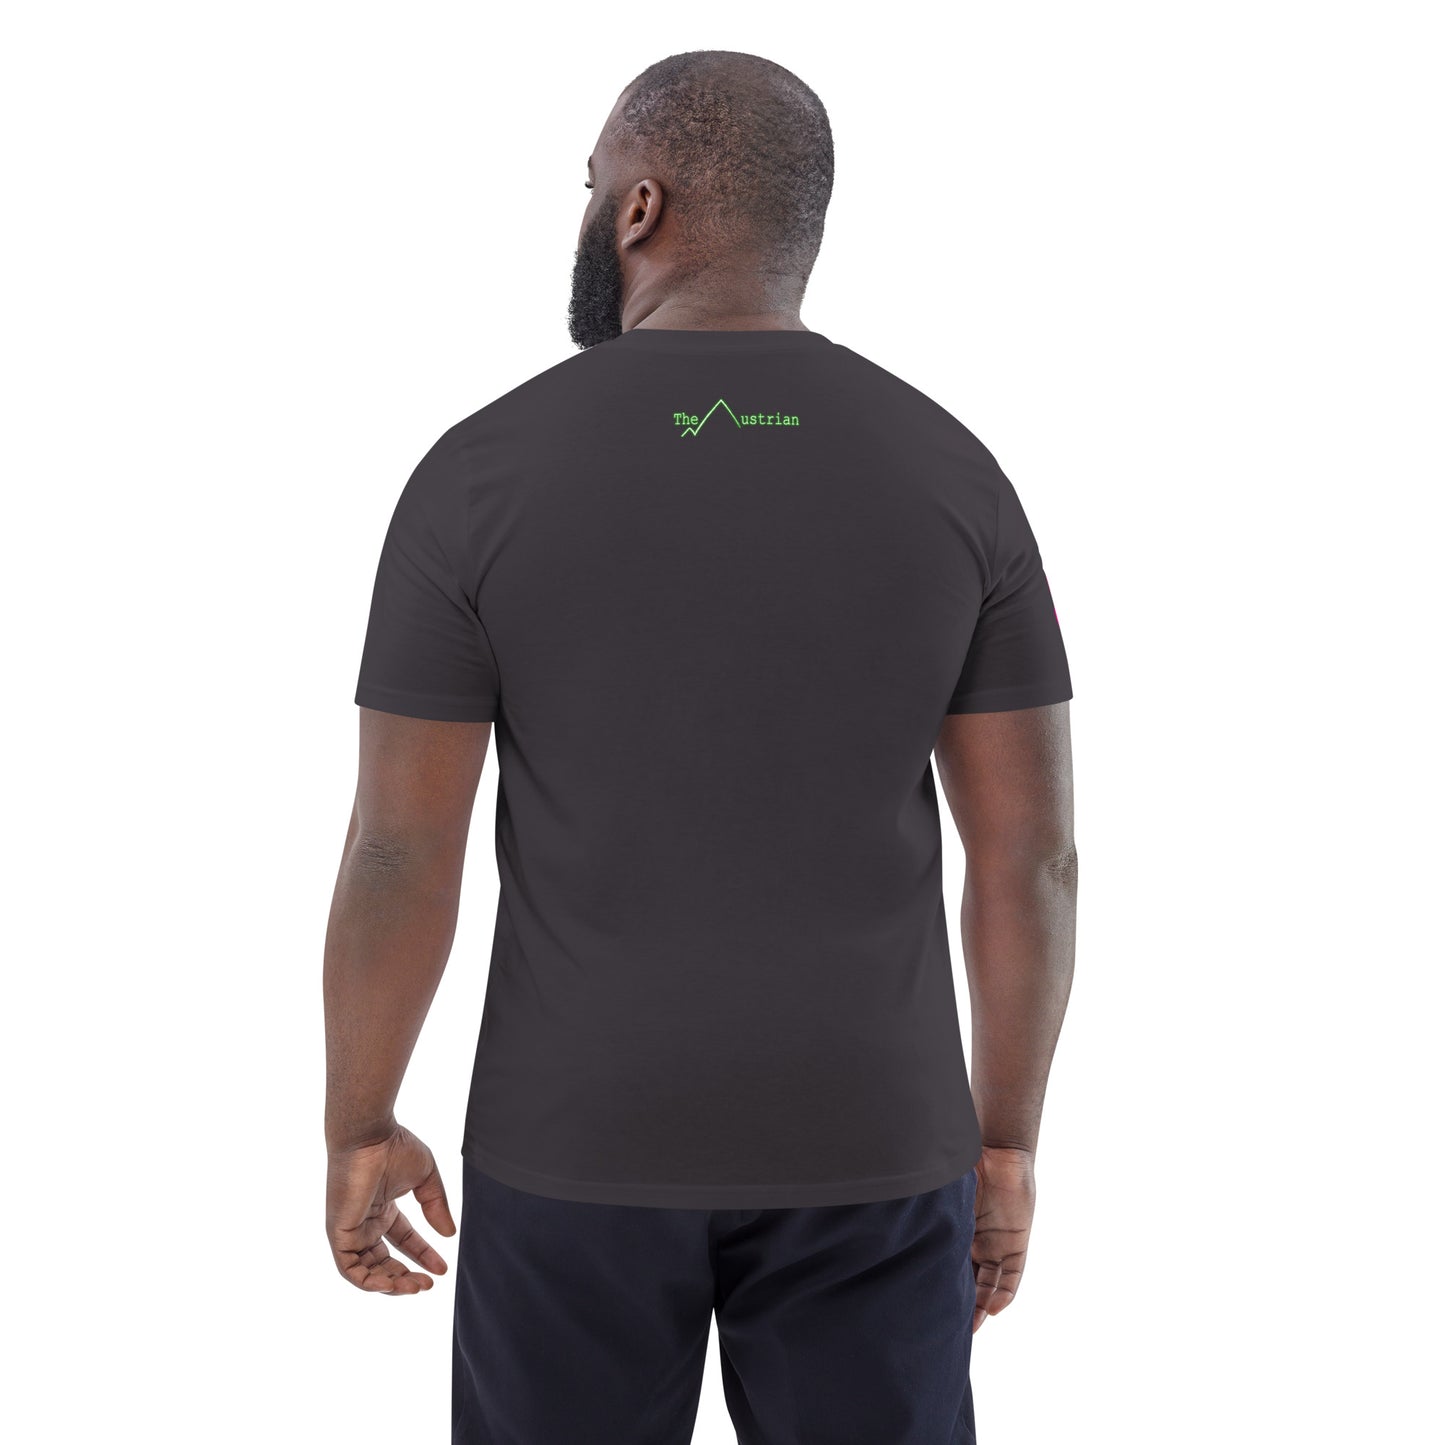 Unisex Bio Baumwoll T-Shirt - The Austrian